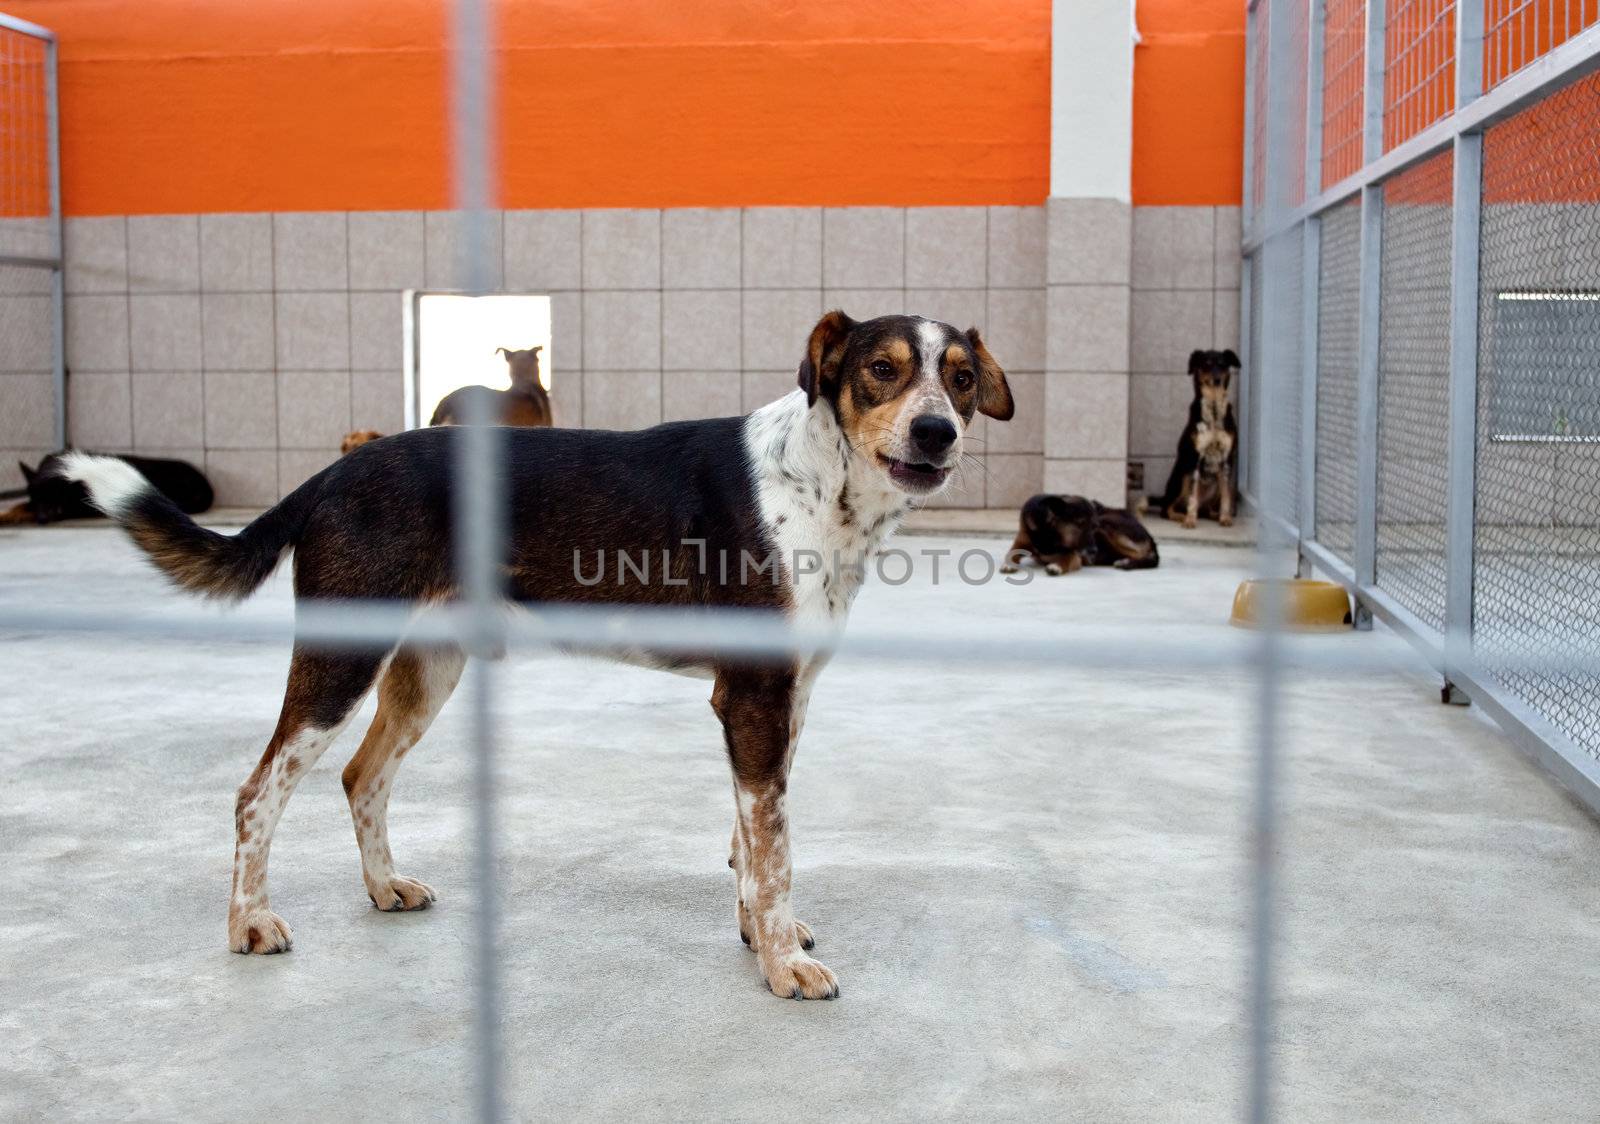 homeless dog in a shelter behind bars, looking at camera